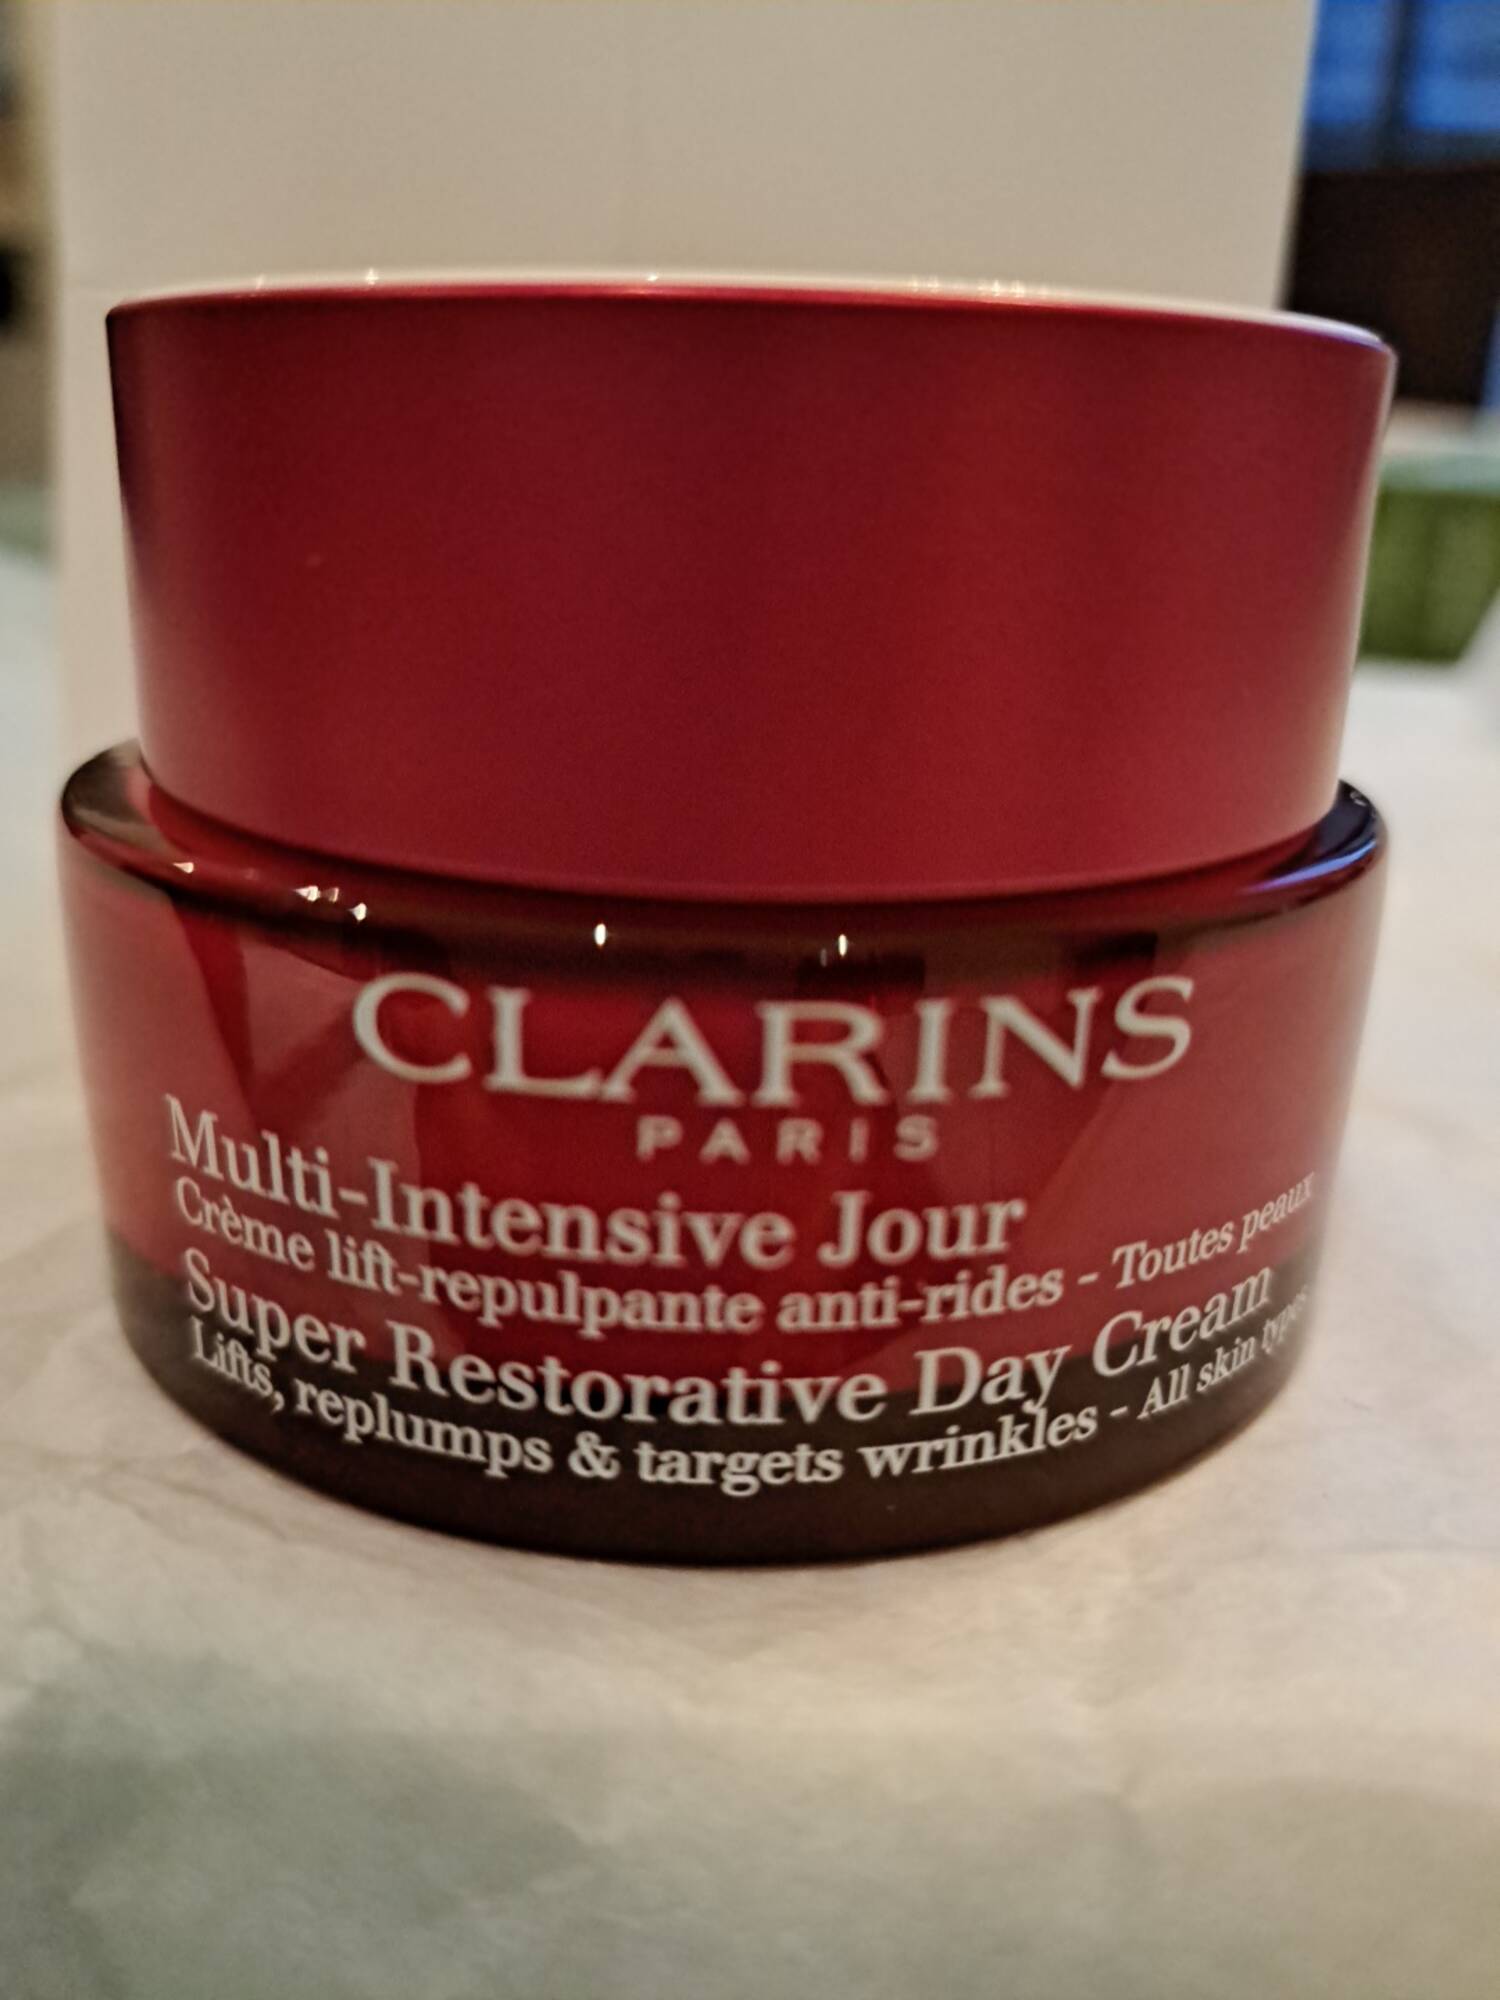 CLARINS - Multi-intensive jour - Crème lift-repulpante anti-rides